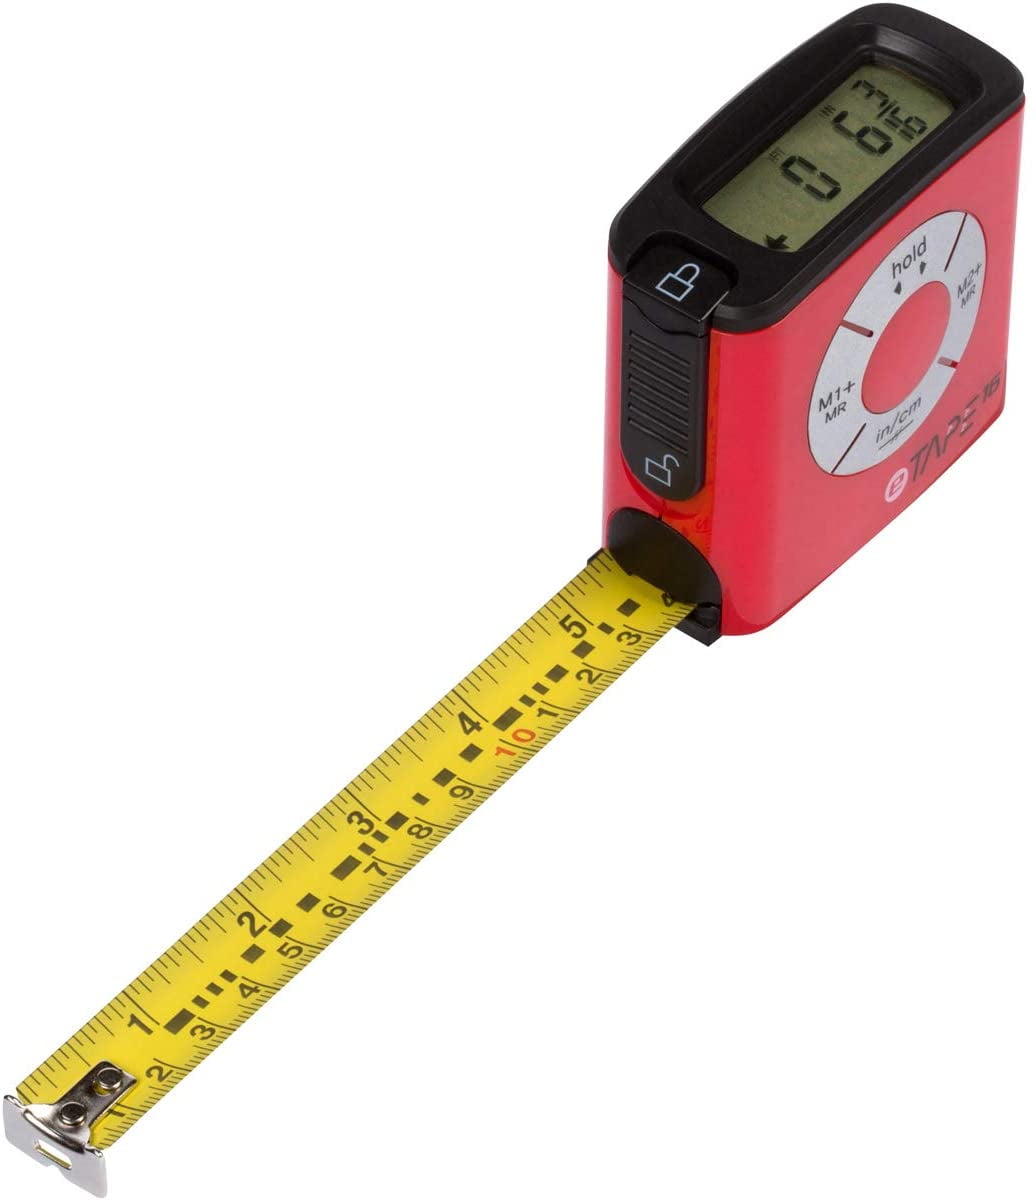 Fridja Mini Small Tape Measure Portable Student Meter Ruler Soft Ruler Tape  Measure Three Circumferences Legs Waist Chest Measurement Clothes Ruler